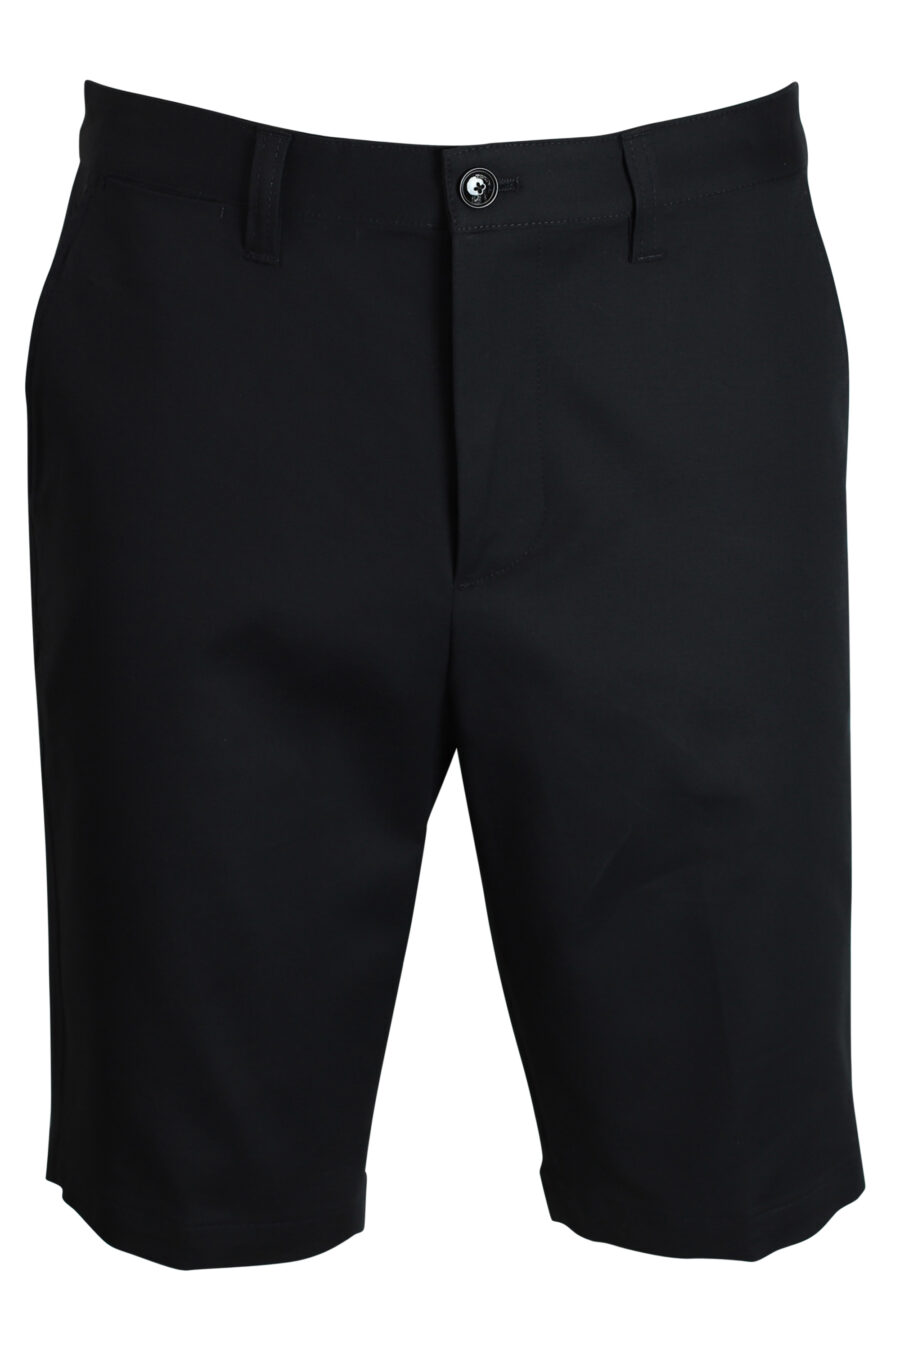 Dunkelblaue Shorts mit Mini-Logo - 8057163302535